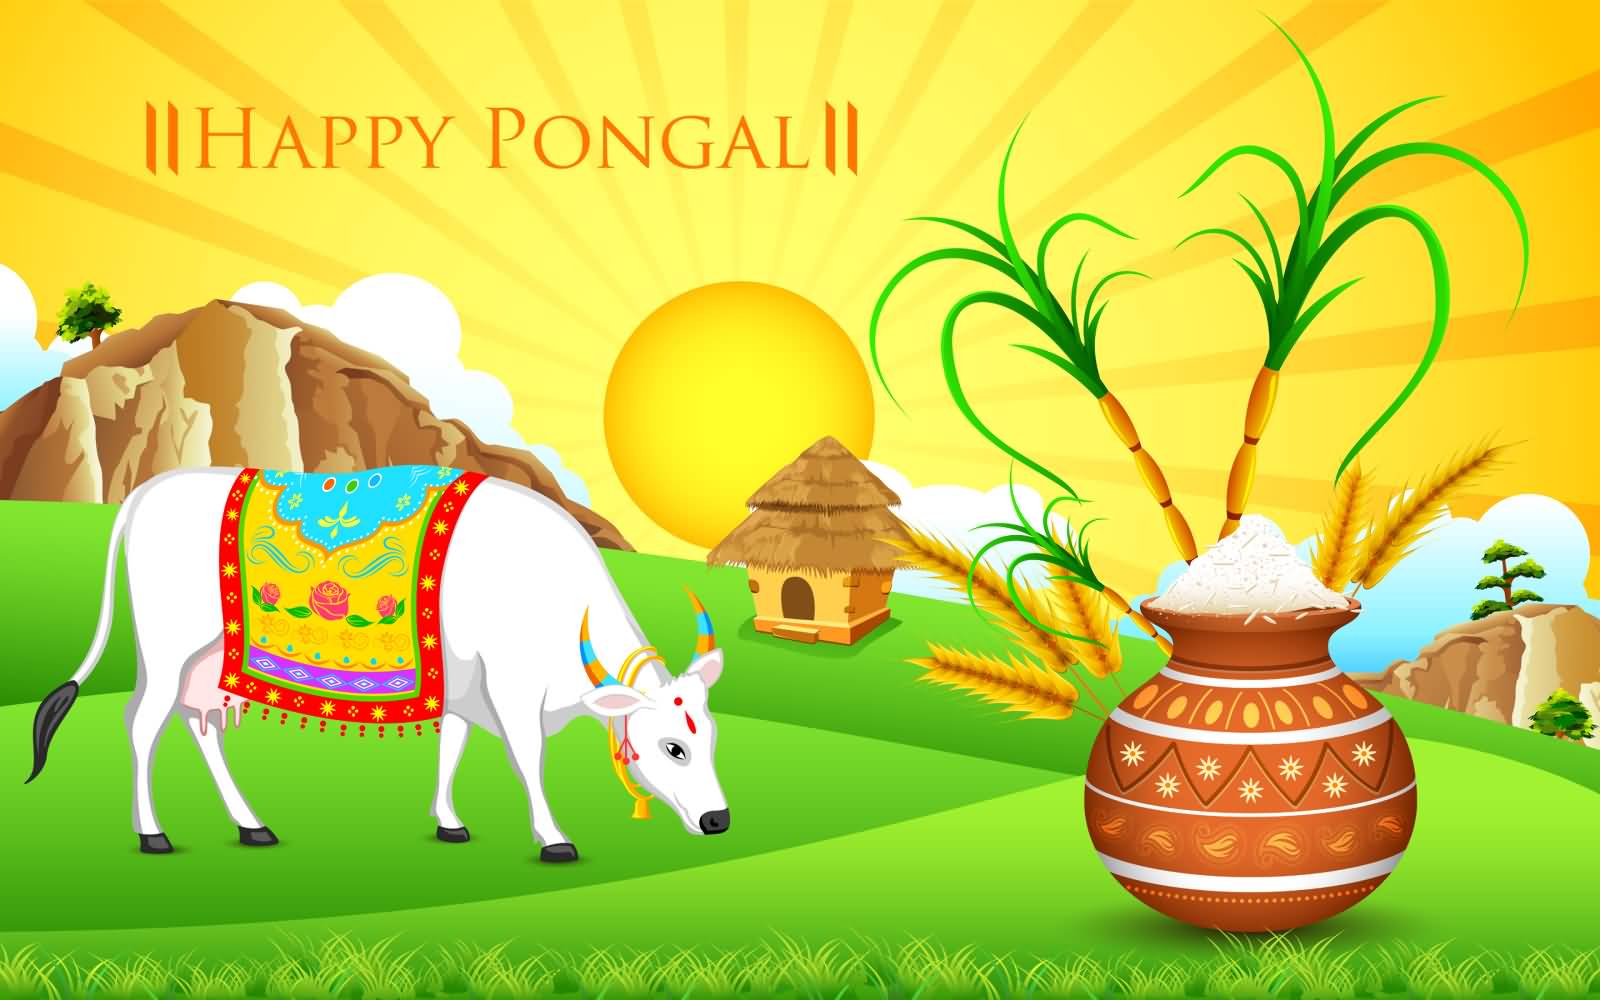 Happy Pongal Sunrise, Cow, Hut And Pot Illustration